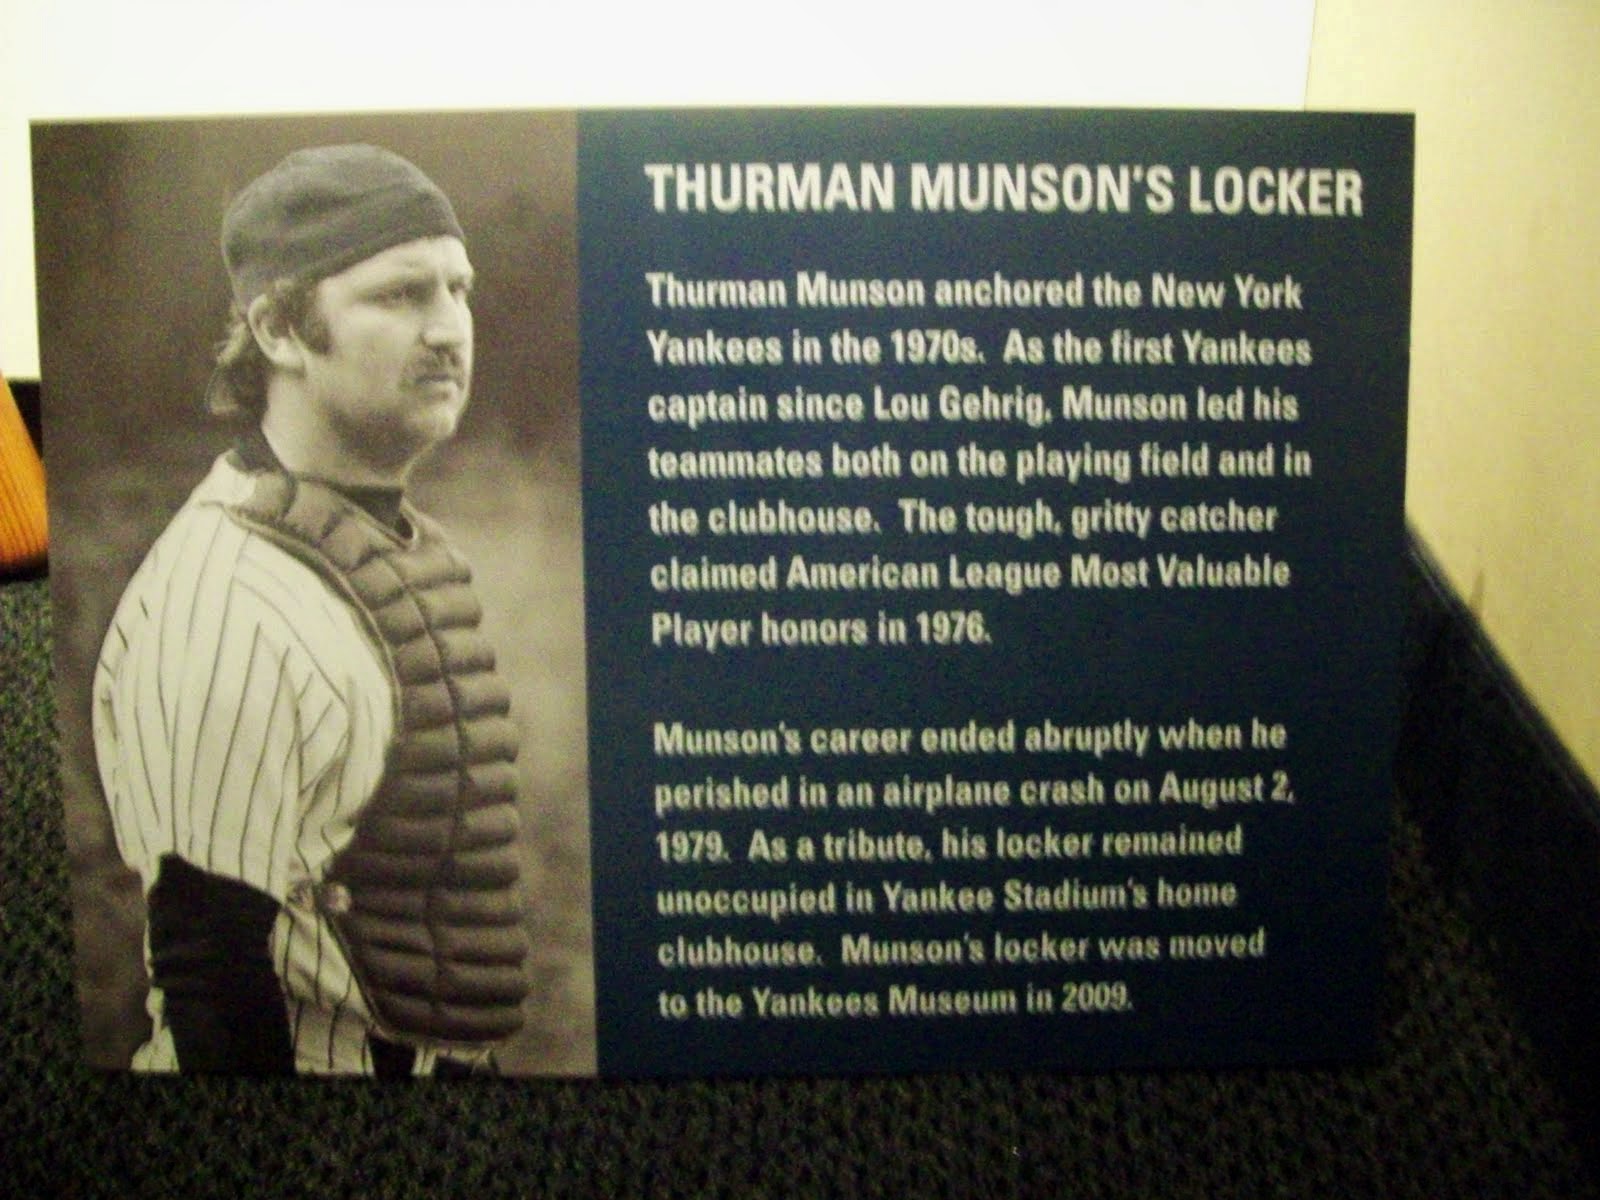 Thurman Munson's locker